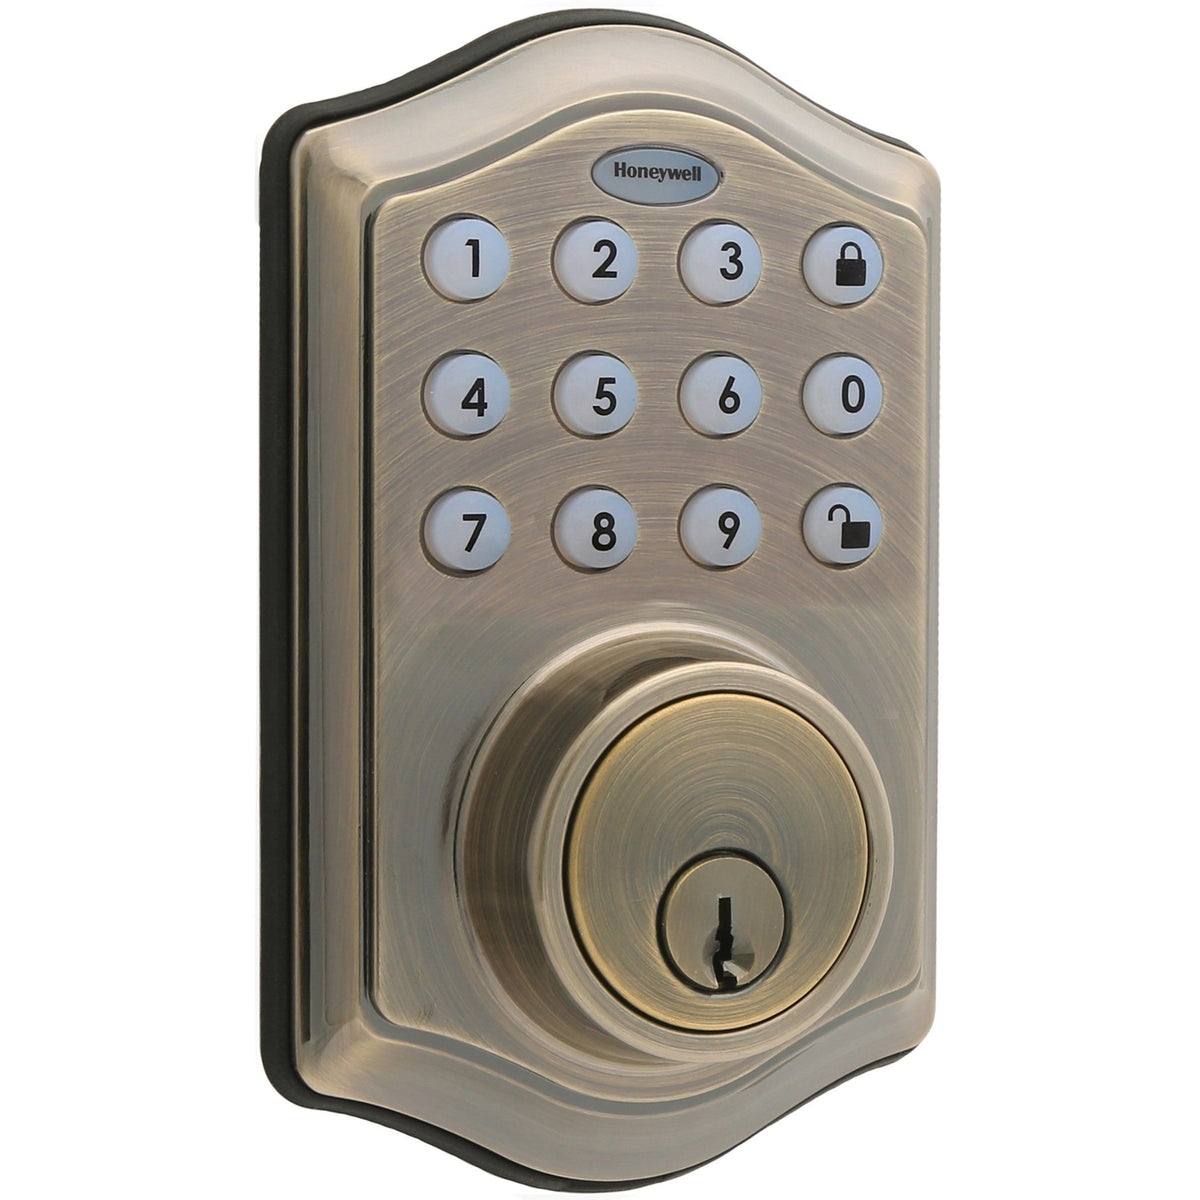 Honeywell 8712109 Electronic Deadbolt Door Lock with Keypad in Antique Brass